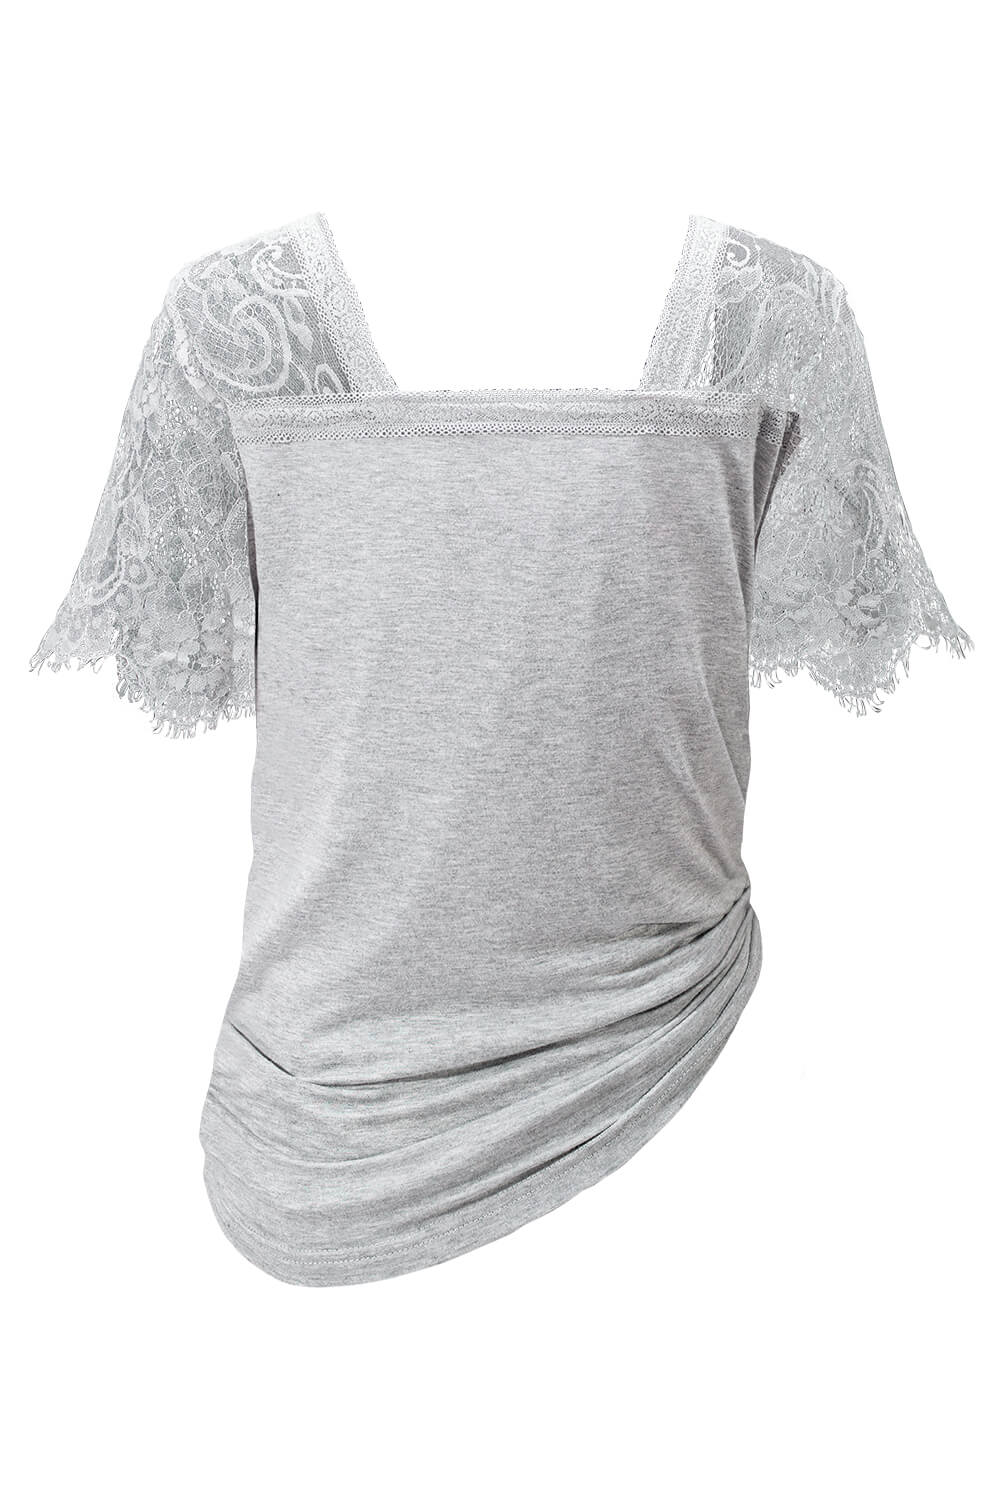 Gray Sweet Side Lace Short Sleeve Deep V Neck T-shirt